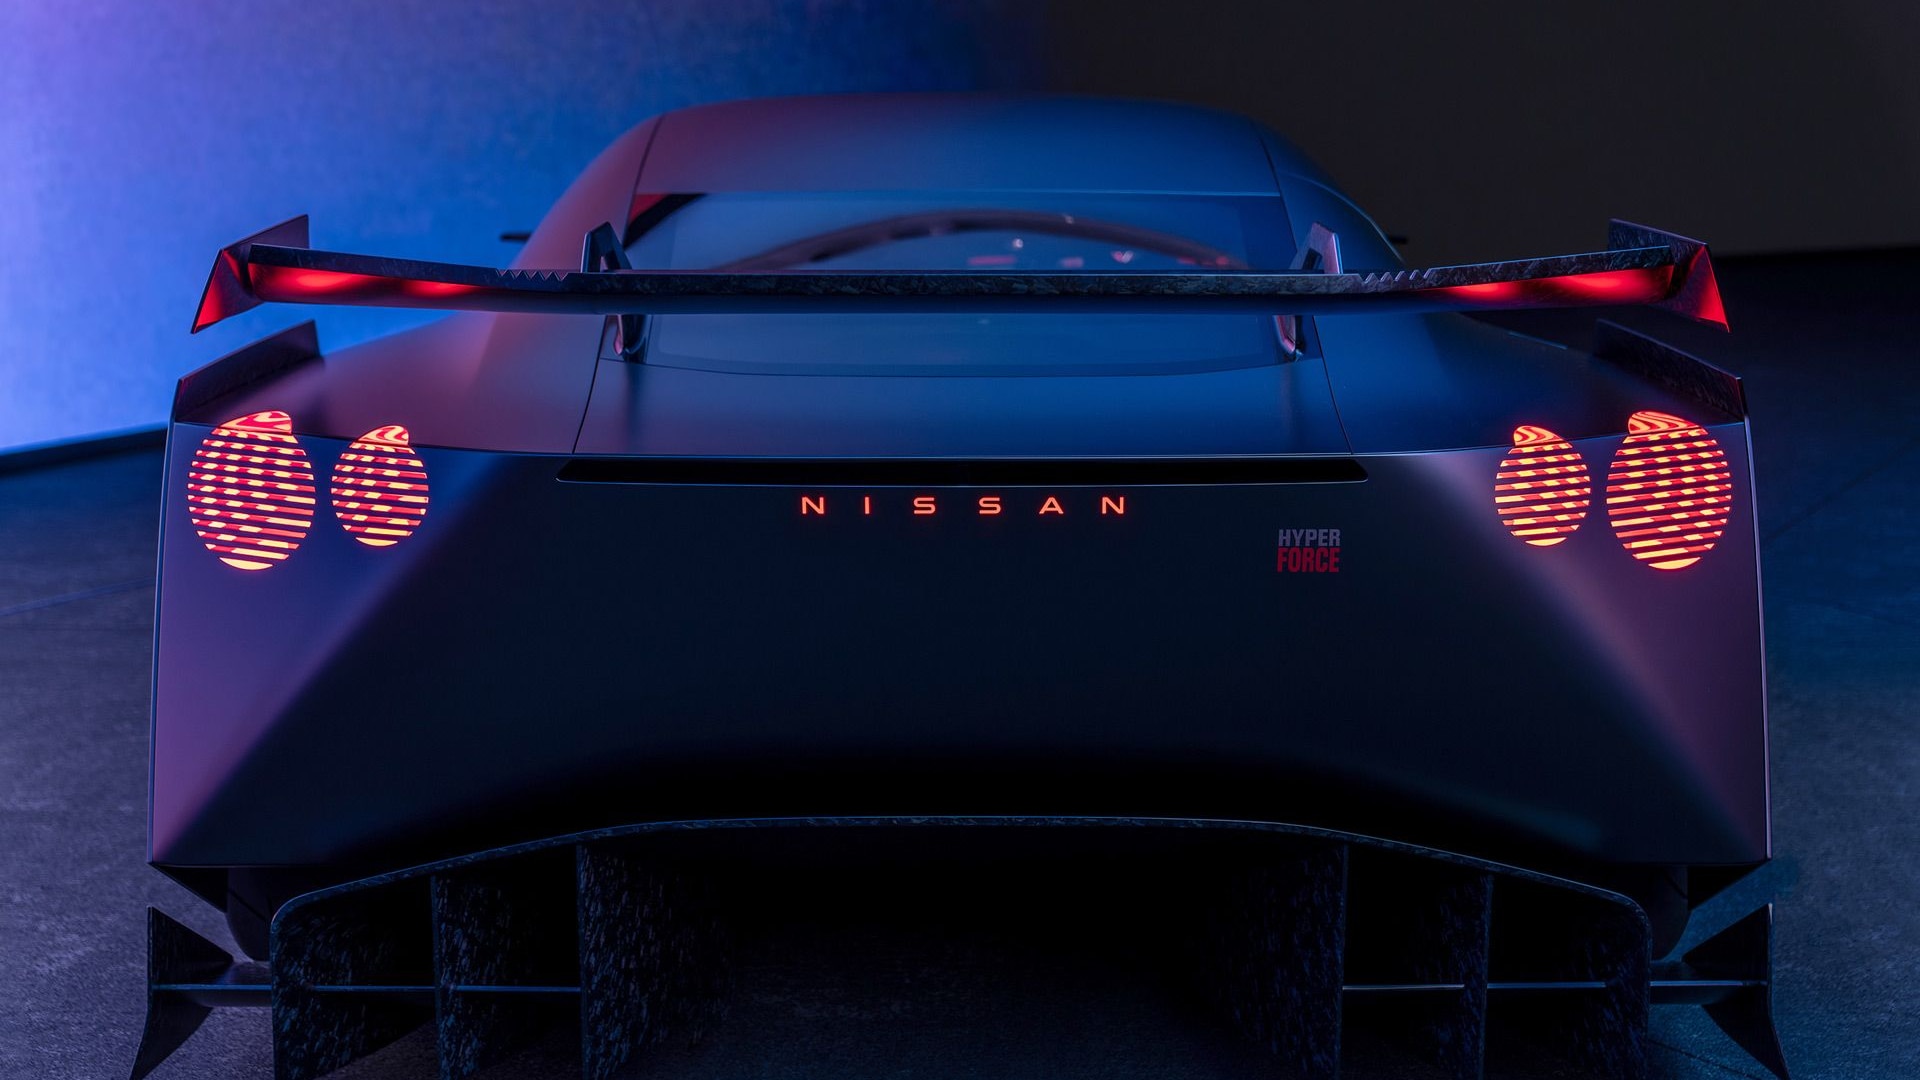 Nissan Hyper Force concept